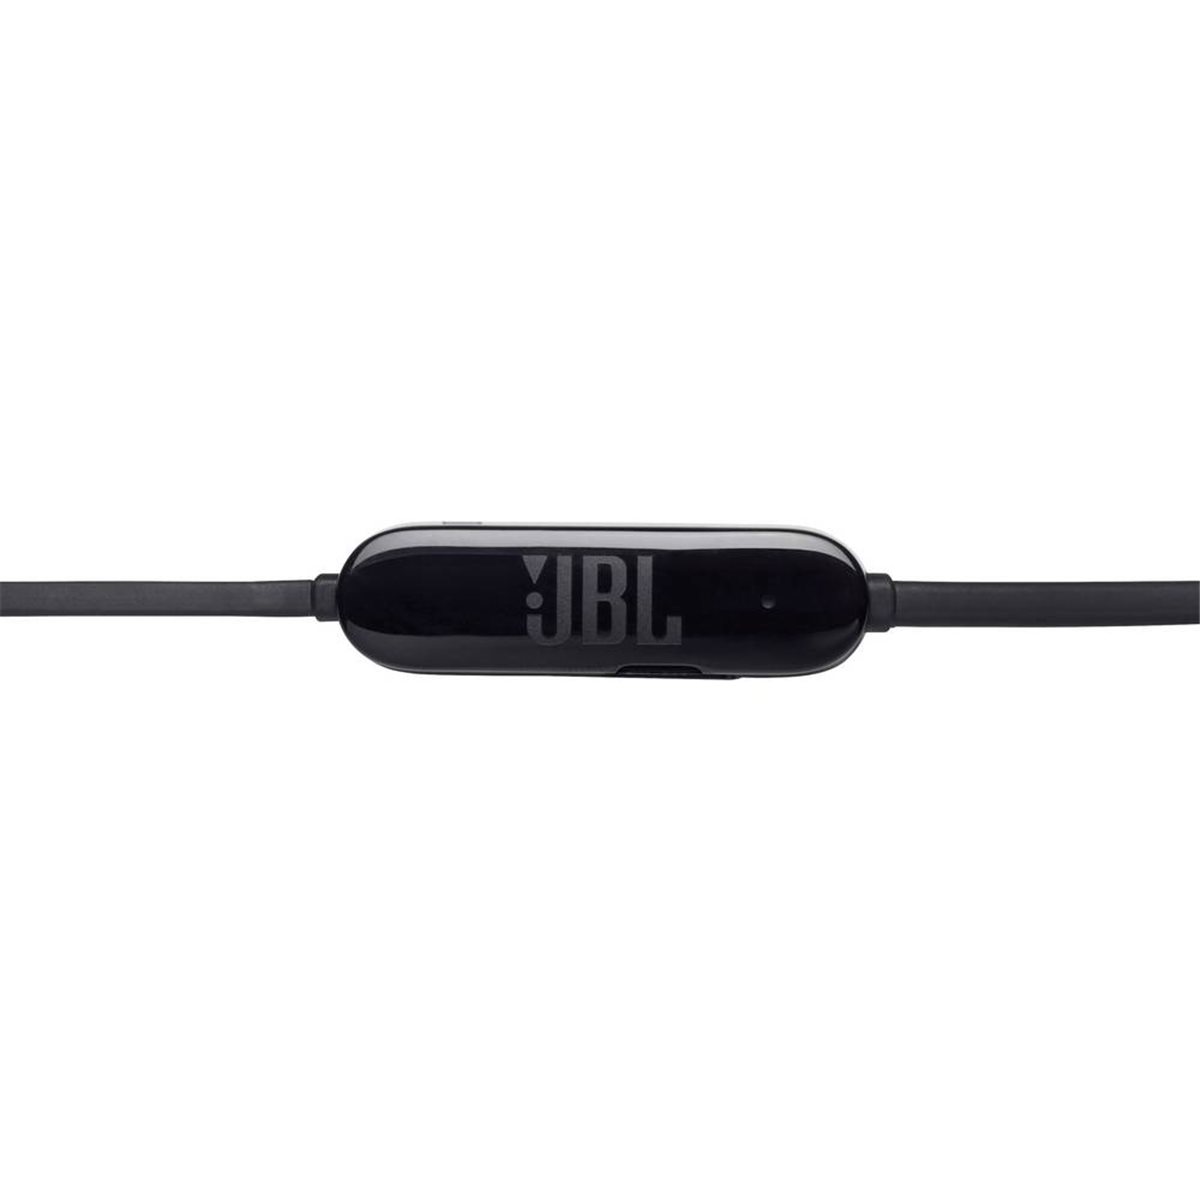 Zubehör stereo Smartphone BT | JBLT125BTBLK black MOBX.CH - Cable JBL - Wireless Flat InEar, Bluetooth-Sportheadset JBLT125BTBLK 125 - - : Mic/Remote, 3-Button Schweiz Tune